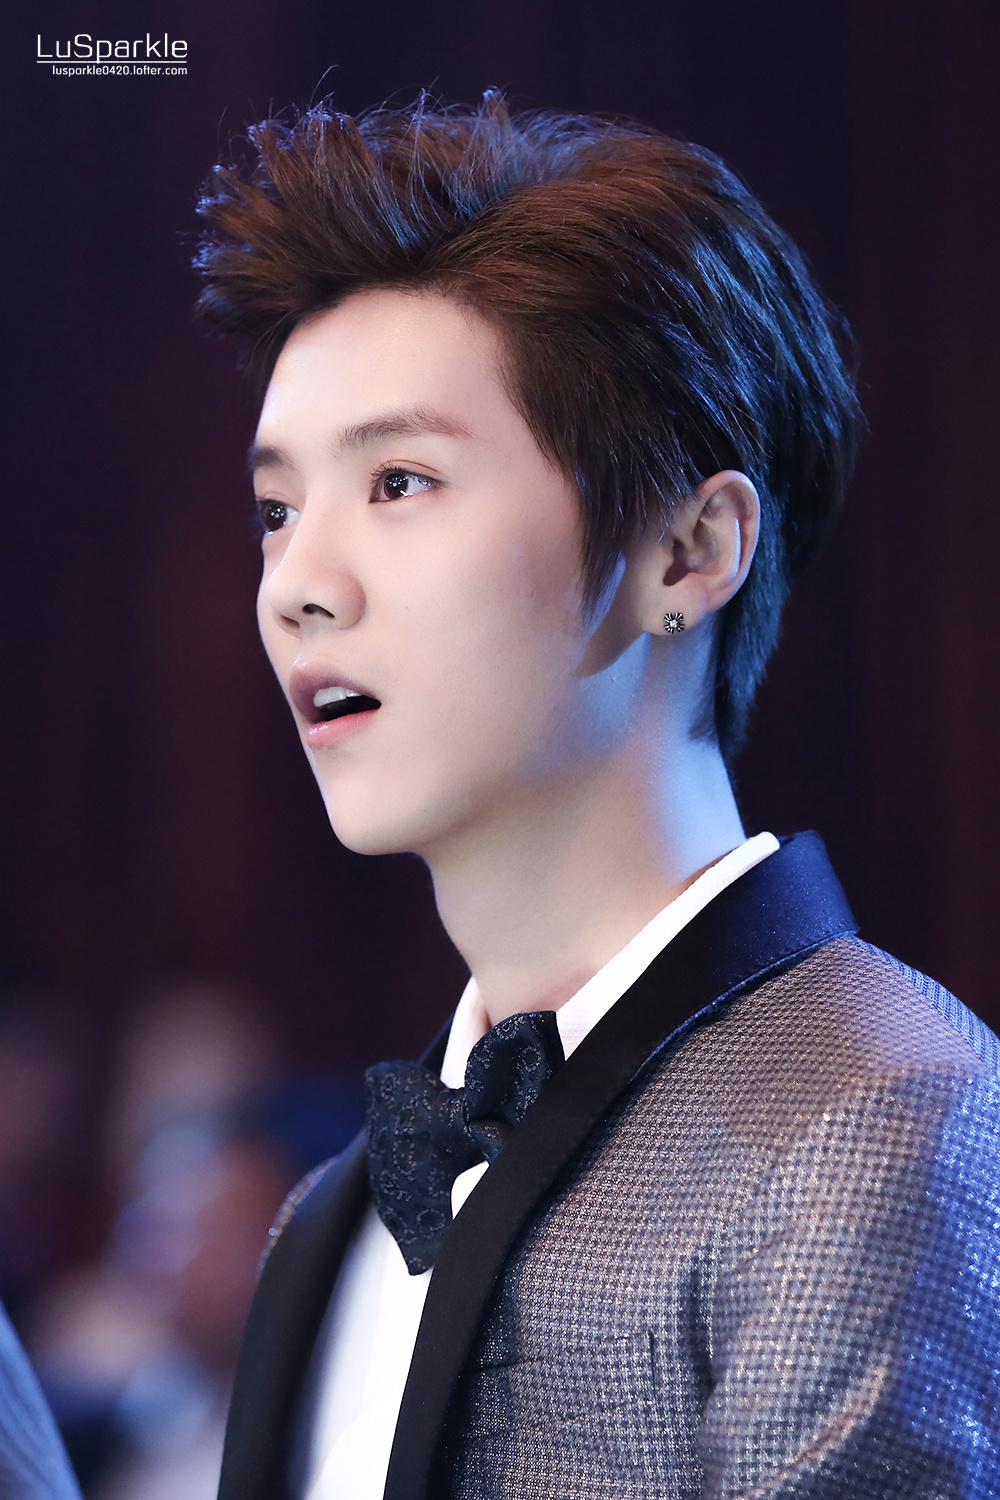 [FANTAKEN] 150115 2014 Weibo Awards Night [100P] 005OSMLnjw1eobmisjlzfj30rs15o18a